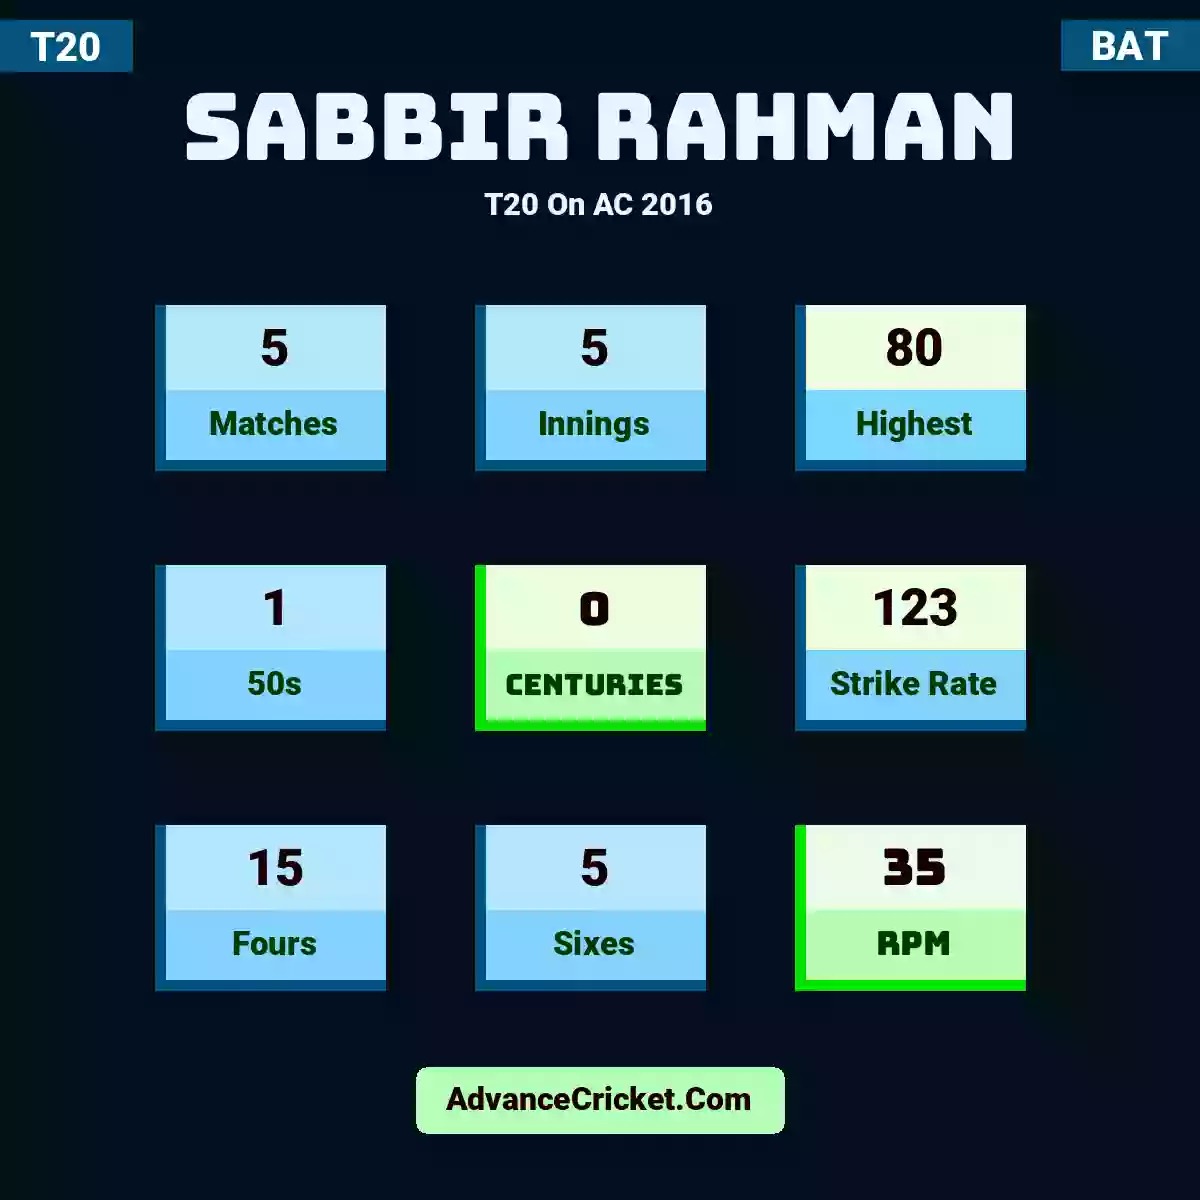 Sabbir Rahman T20  On AC 2016, Sabbir Rahman played 5 matches, scored 80 runs as highest, 1 half-centuries, and 0 centuries, with a strike rate of 123. S.Rahman hit 15 fours and 5 sixes, with an RPM of 35.